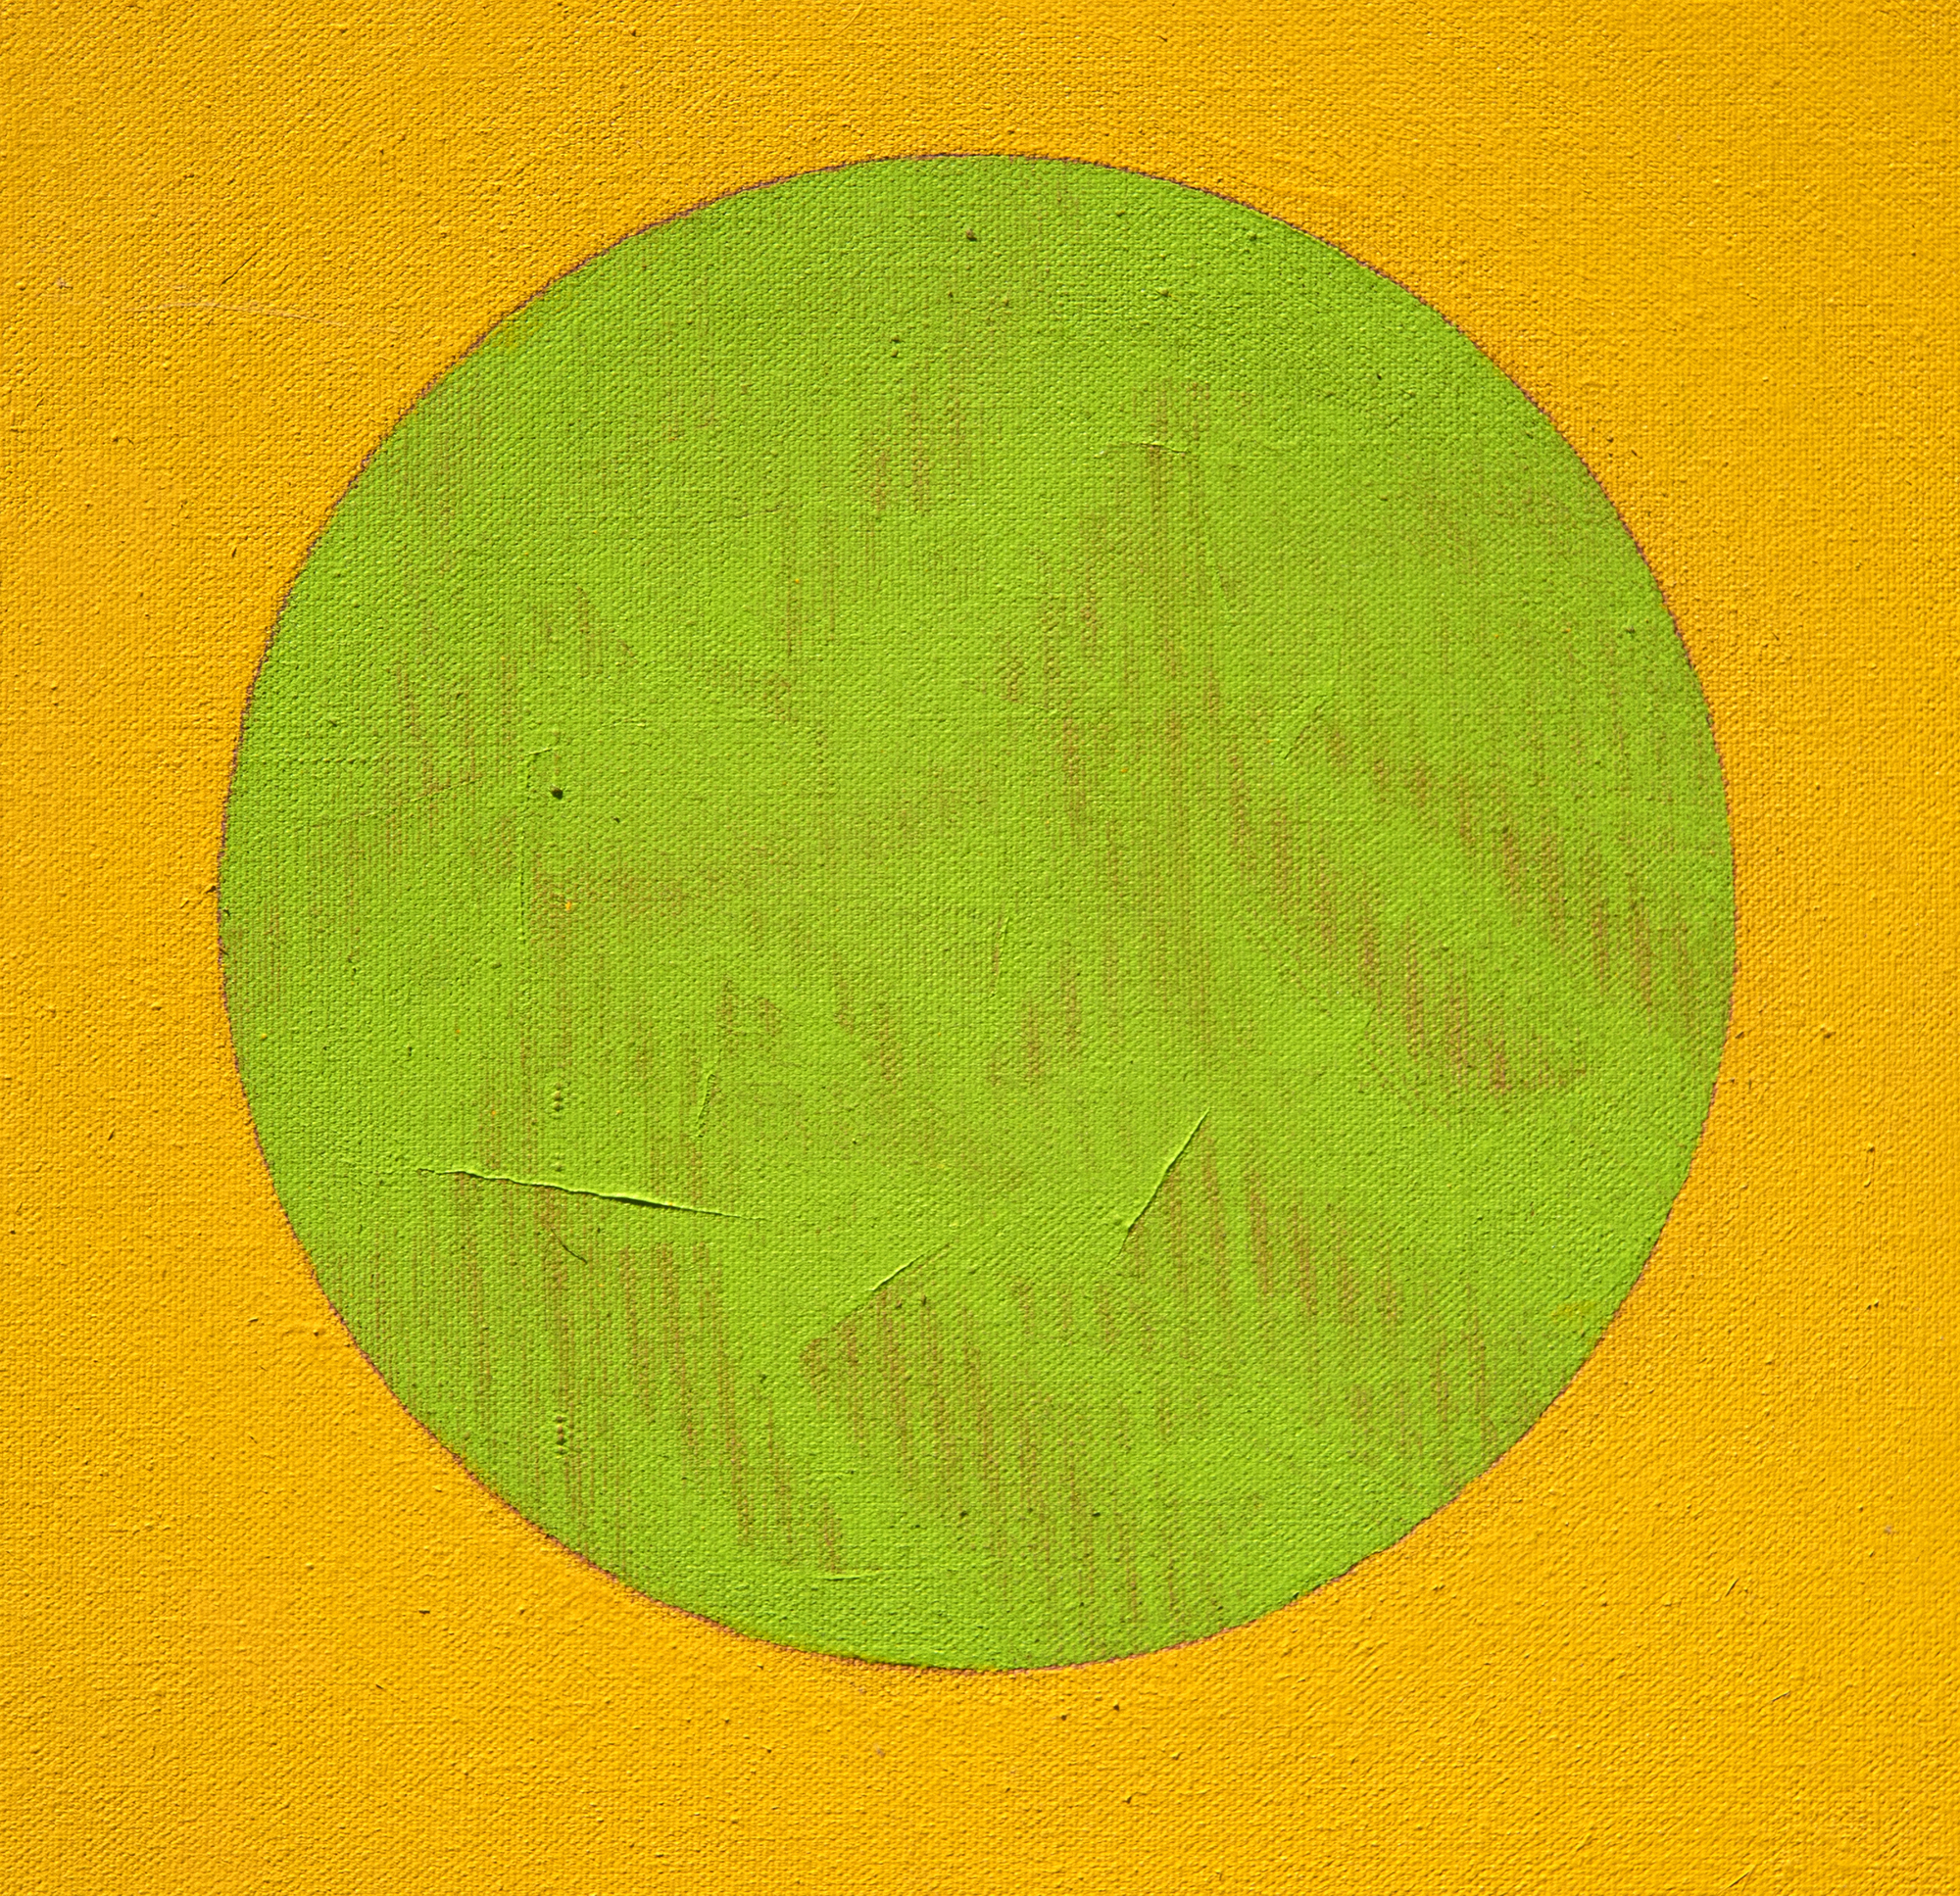 HASSEL سميث-9000 و 9 ليال-الأكريليك والجرافيت علي قماش-68 × 68 1/8 في.